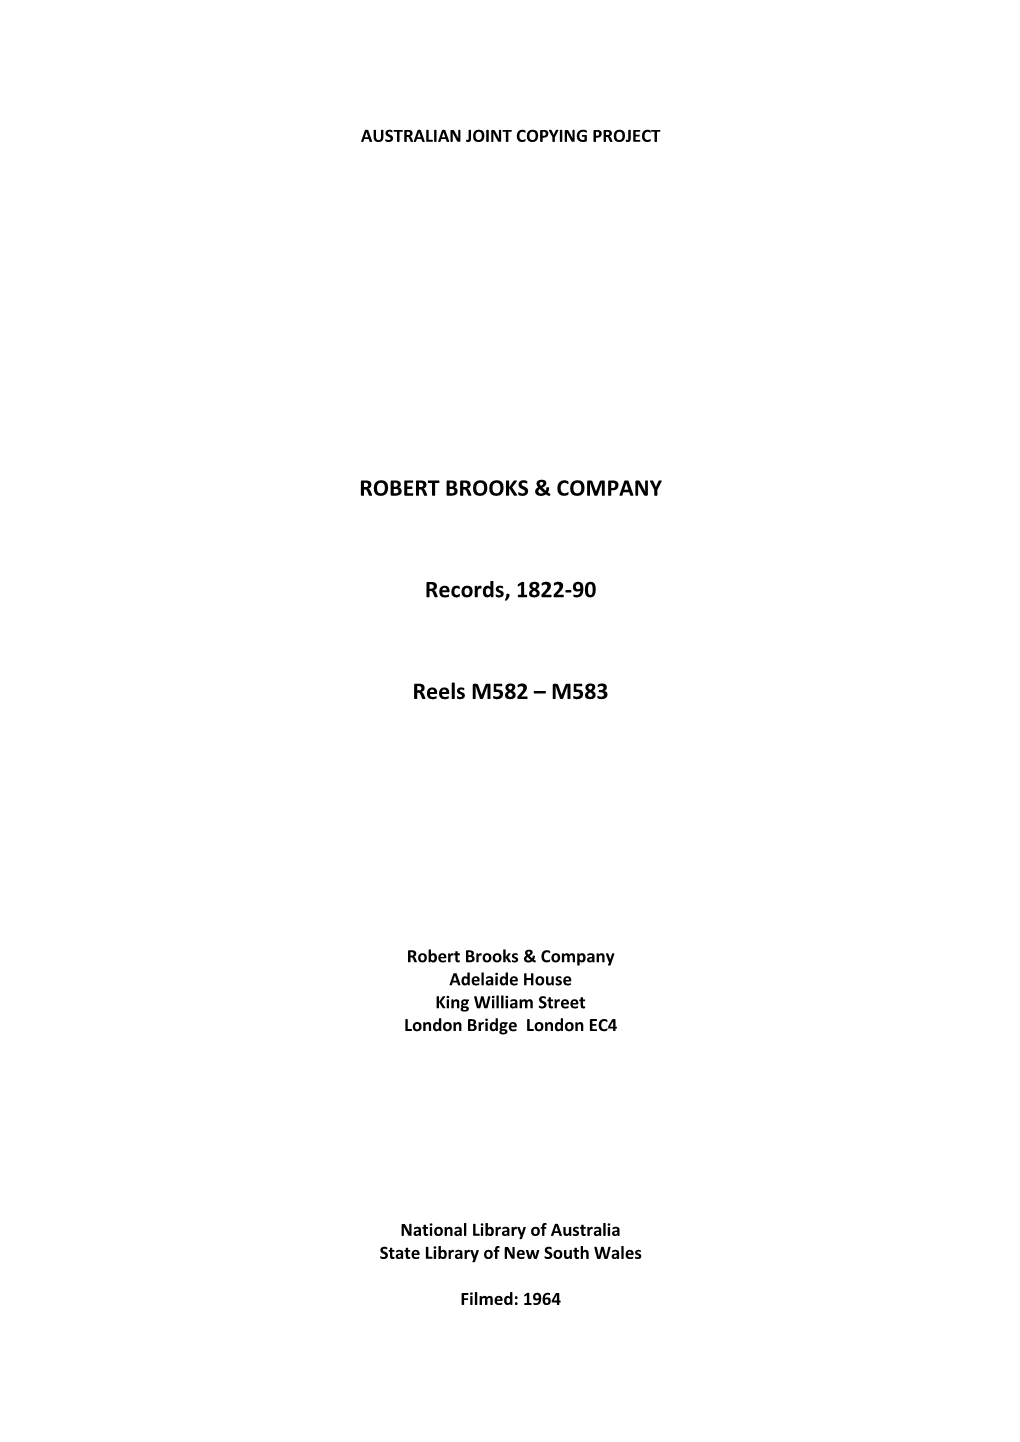 ROBERT BROOKS & COMPANY Records, 1822-90 Reels M582